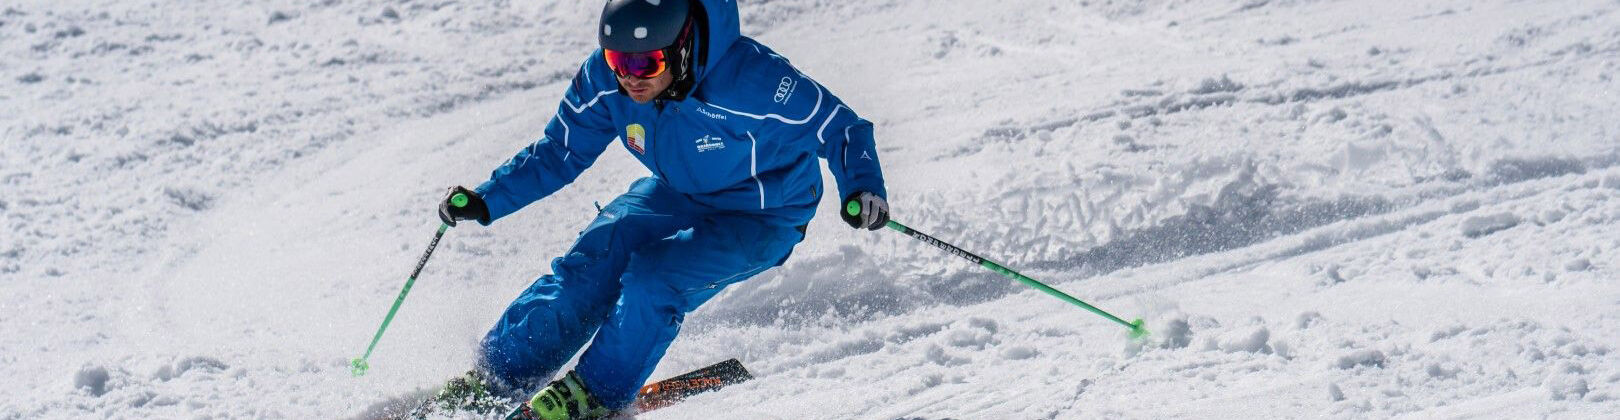 Learn to ski in Flachau - ski courses, snowboard courses - ski school Flachau